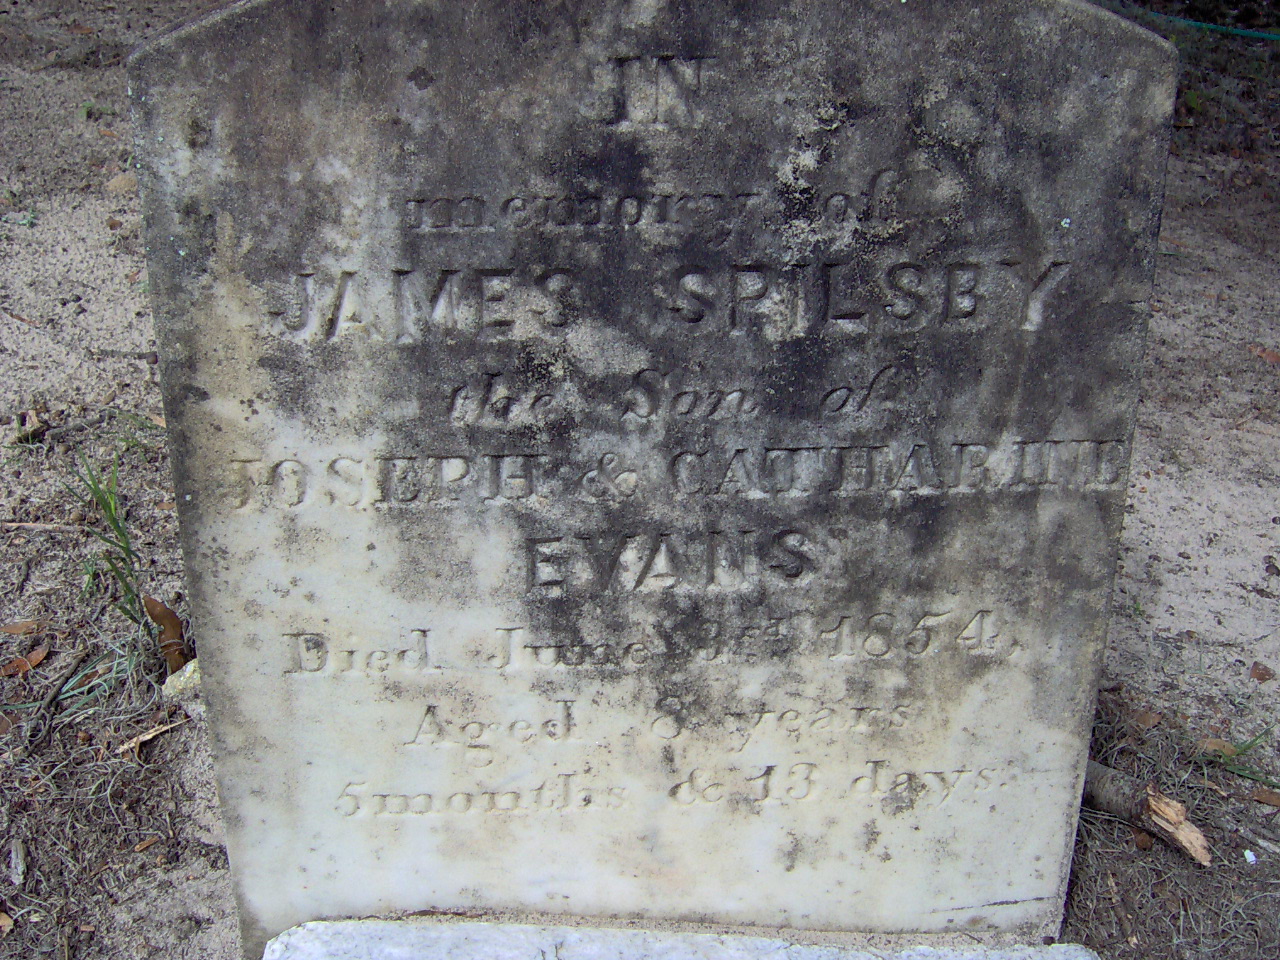 Headstone for Evans, James Spilsby